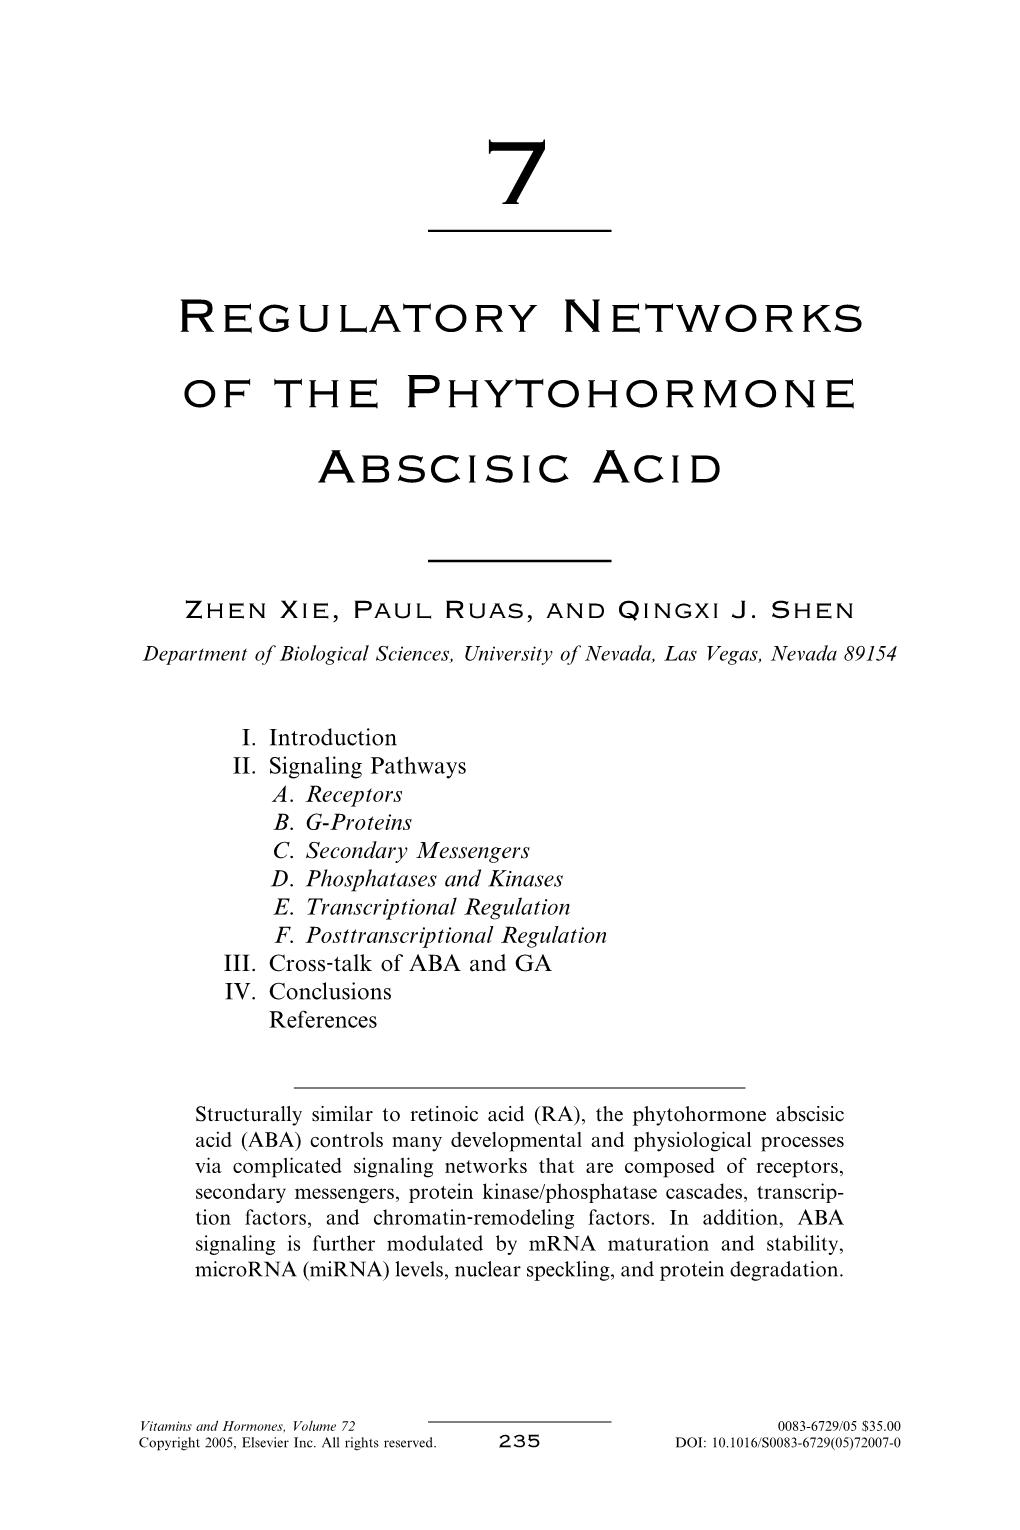 Regulatory Networks of the Phytohormone Abscisic Acid